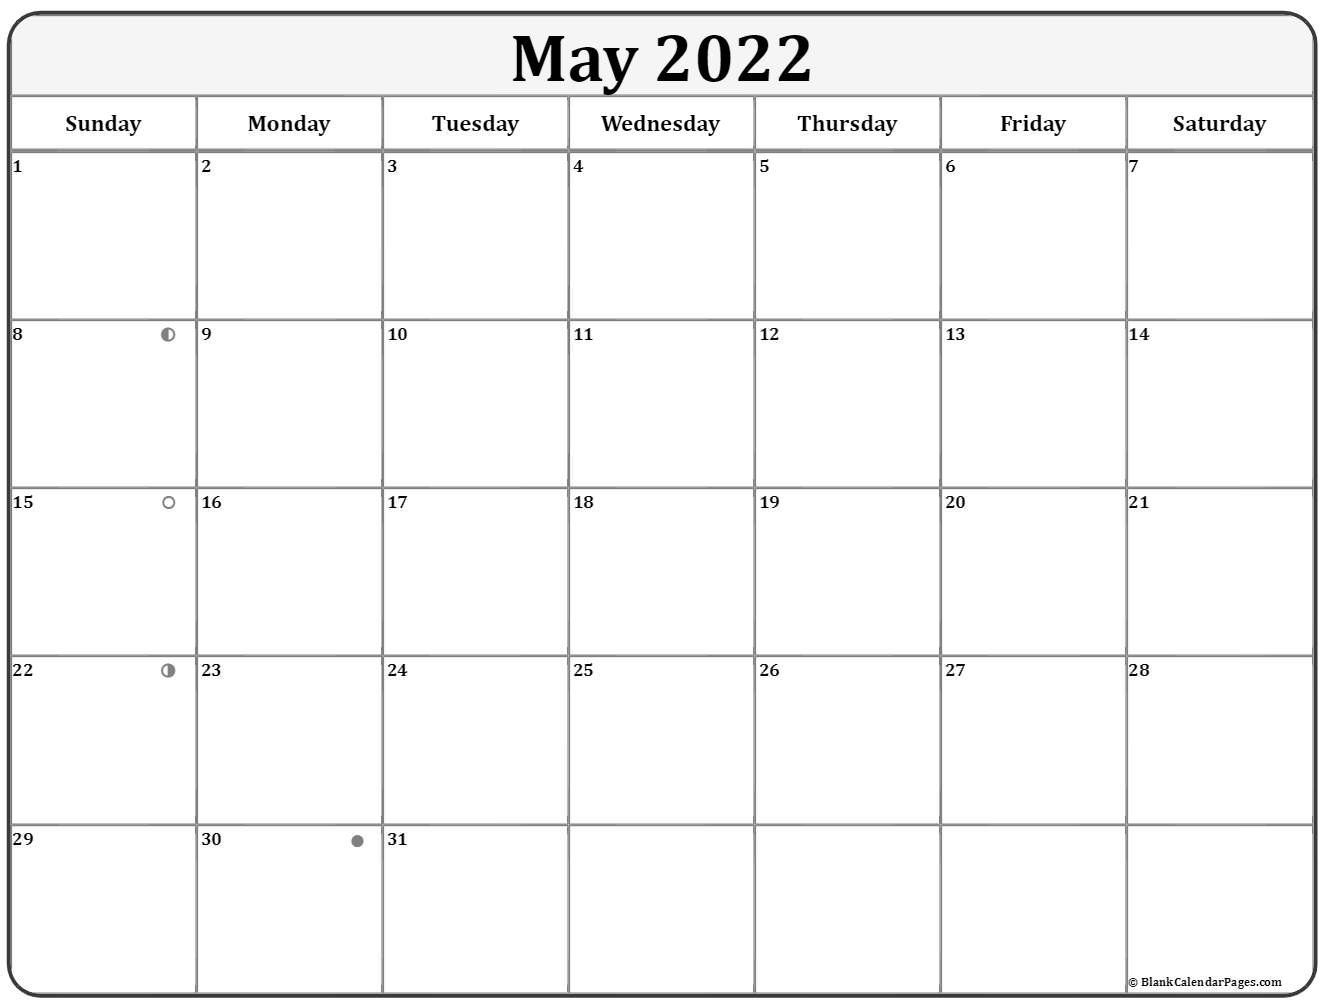 Download Lunar Calendar Of May 2022 Gif - Calendar